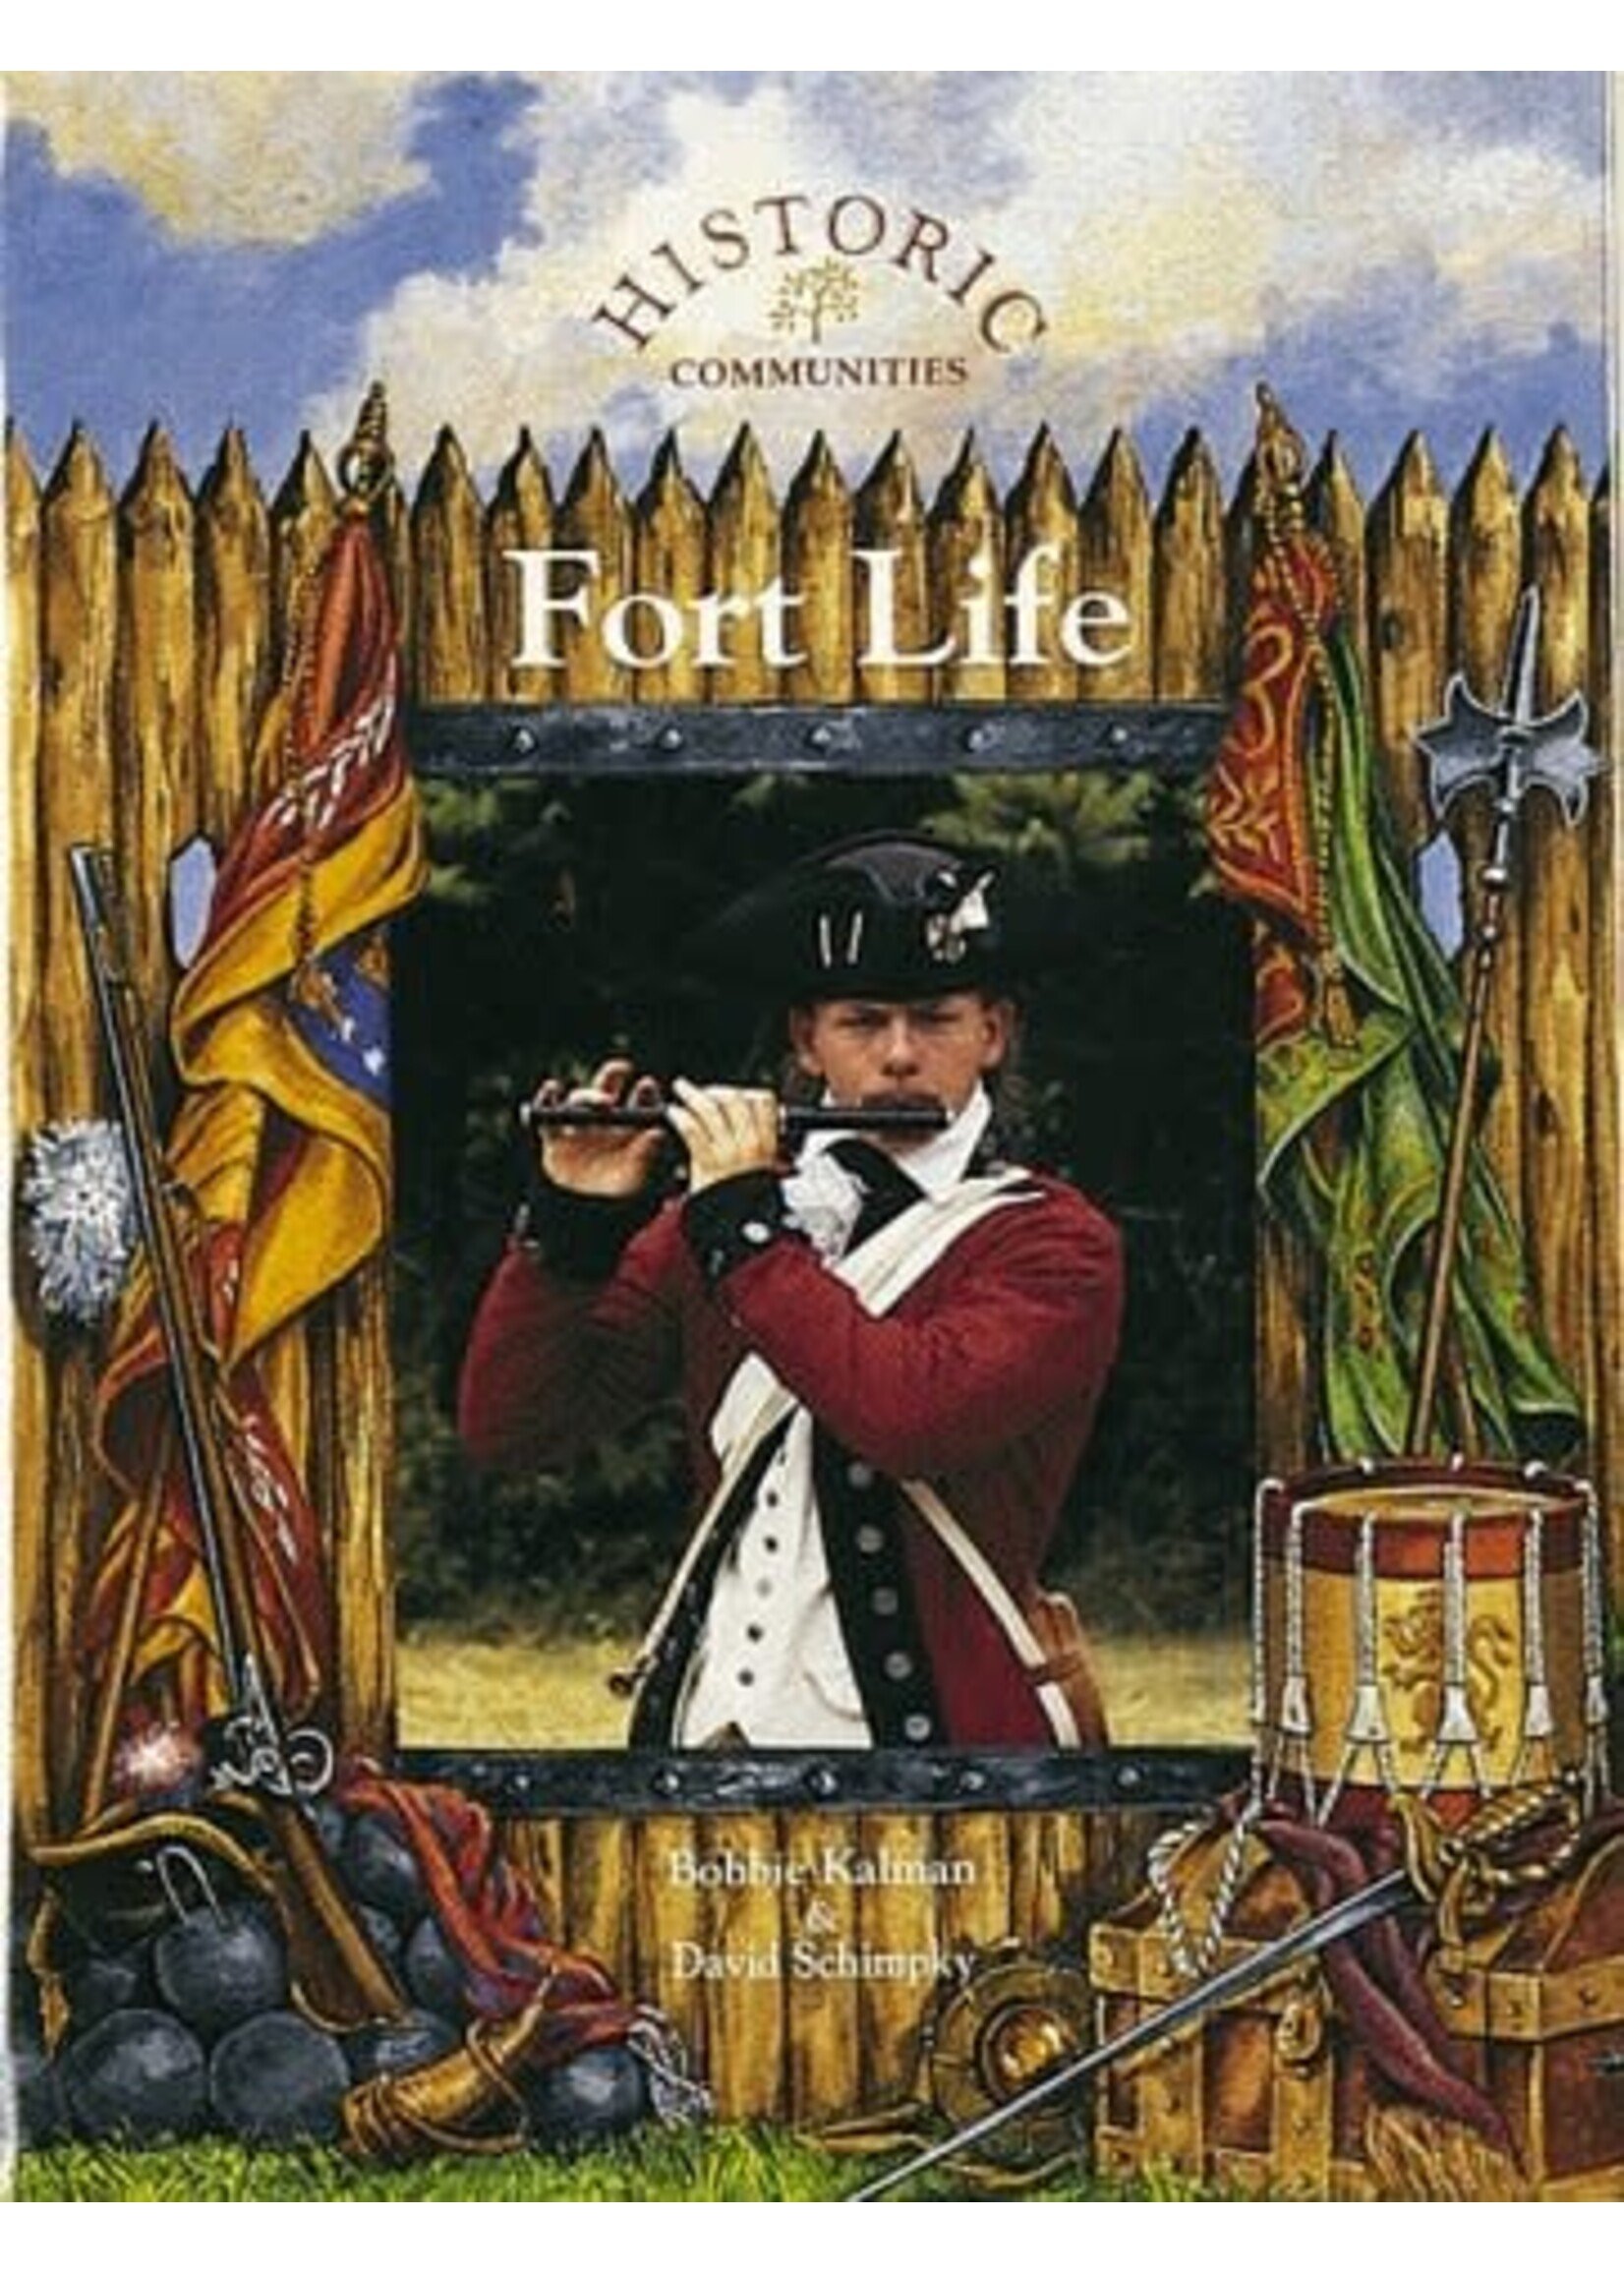 Fort Life: Historic Communities